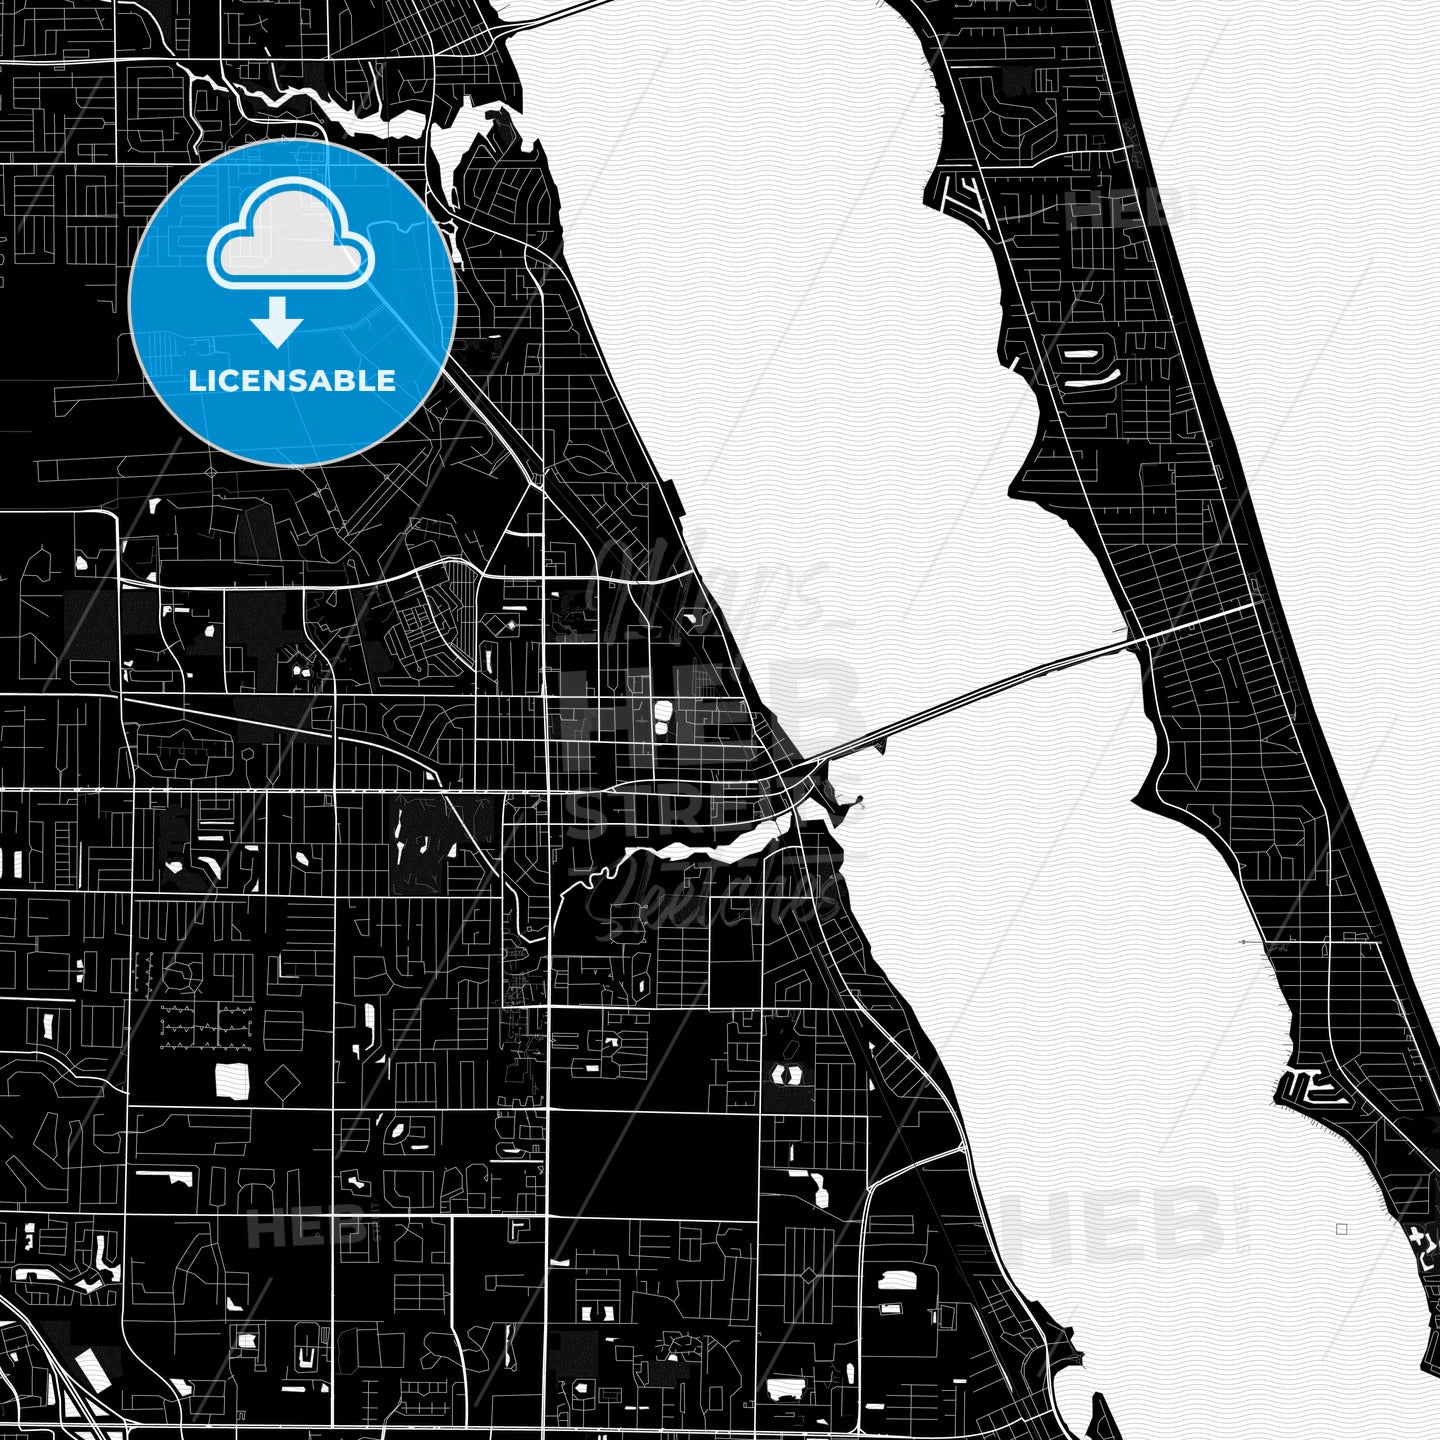 Melbourne, Florida, United States, PDF map